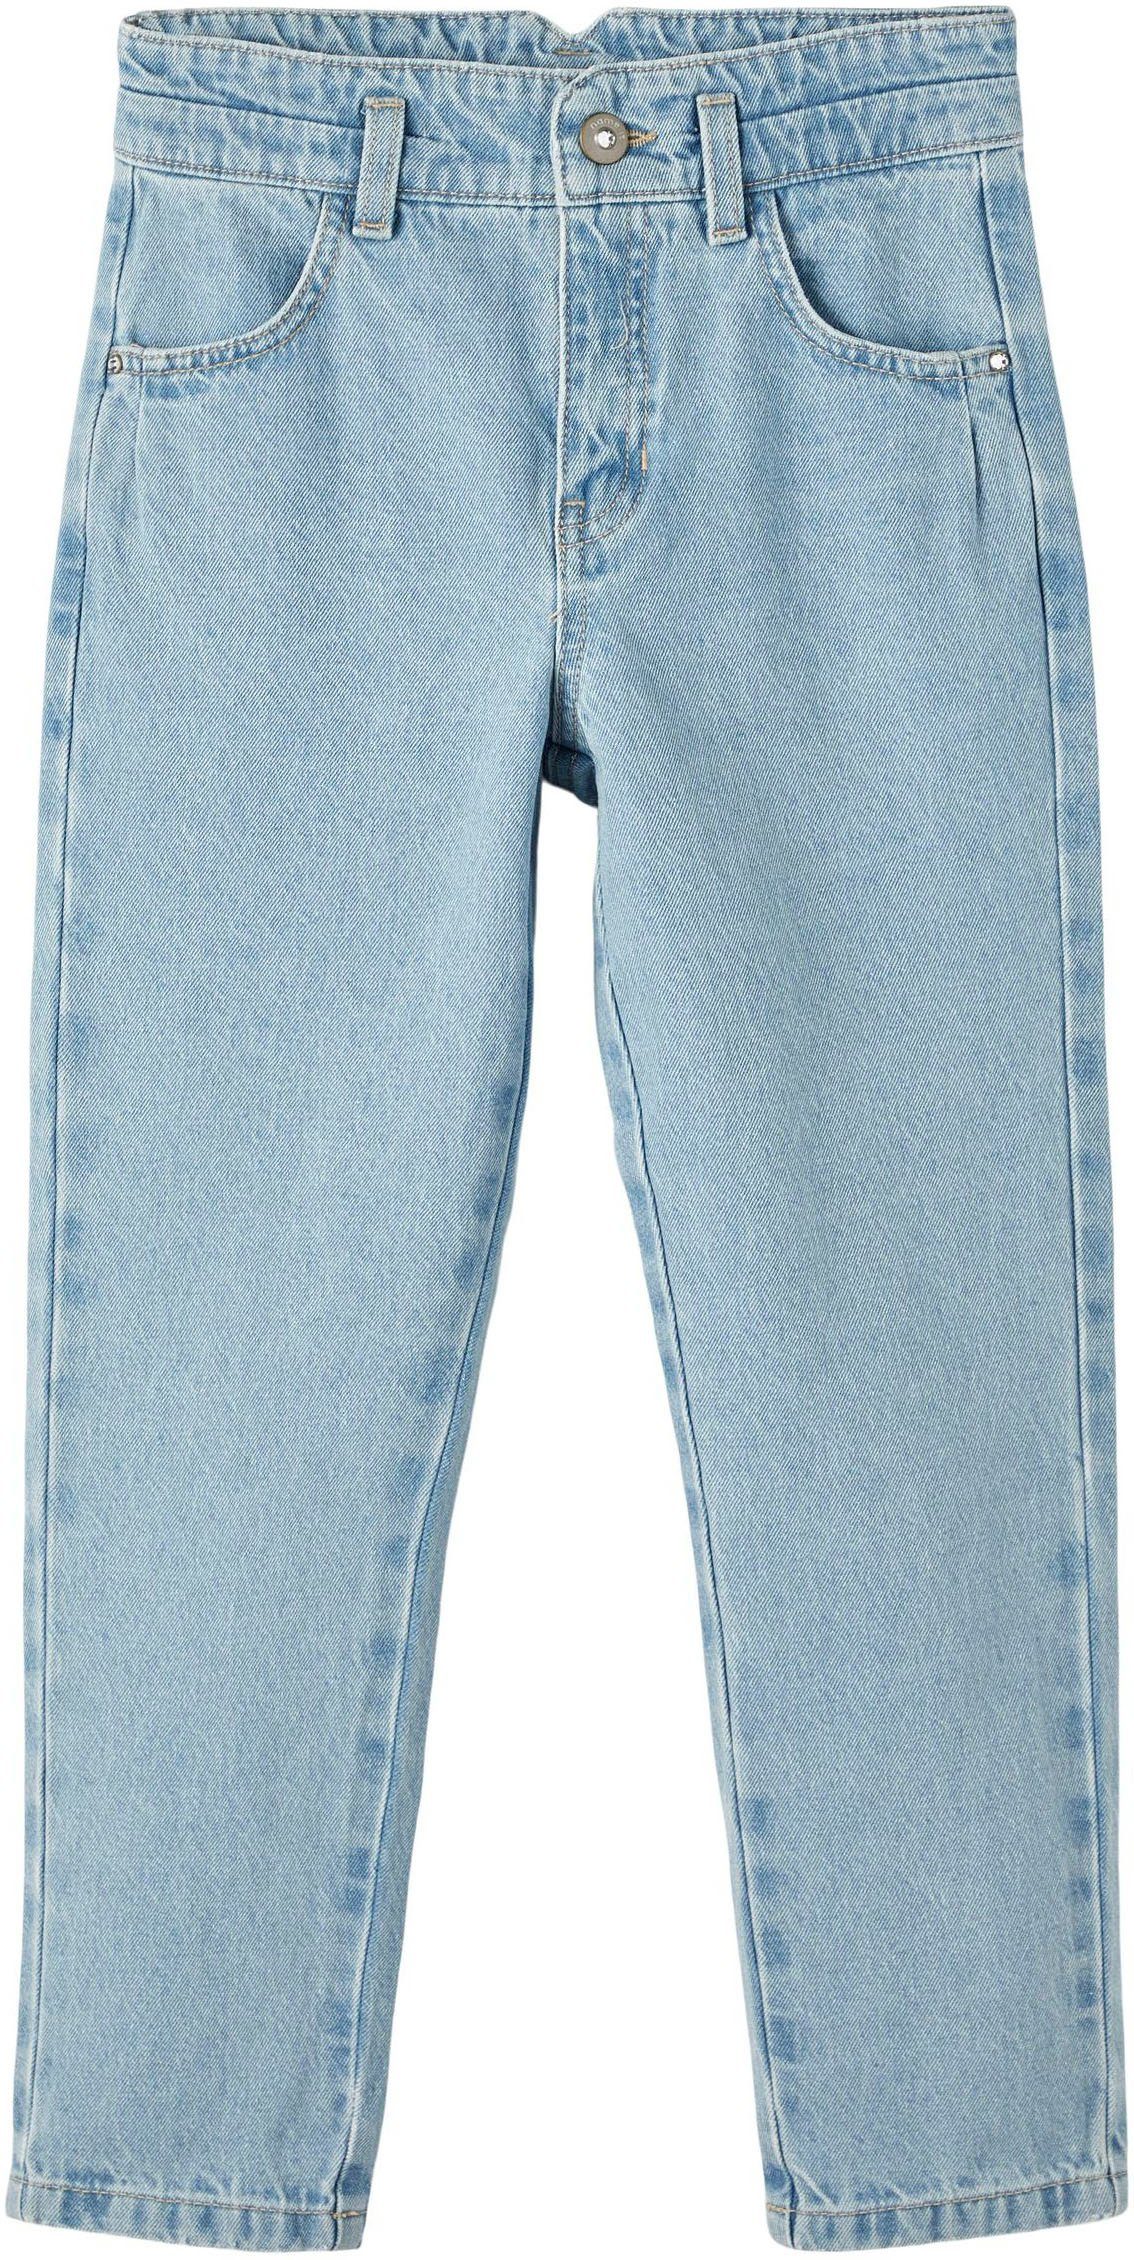 AN MOM Name Light 1092-DO Denim HW High-waist-Jeans It Blue JEANS NOOS NKFBELLA